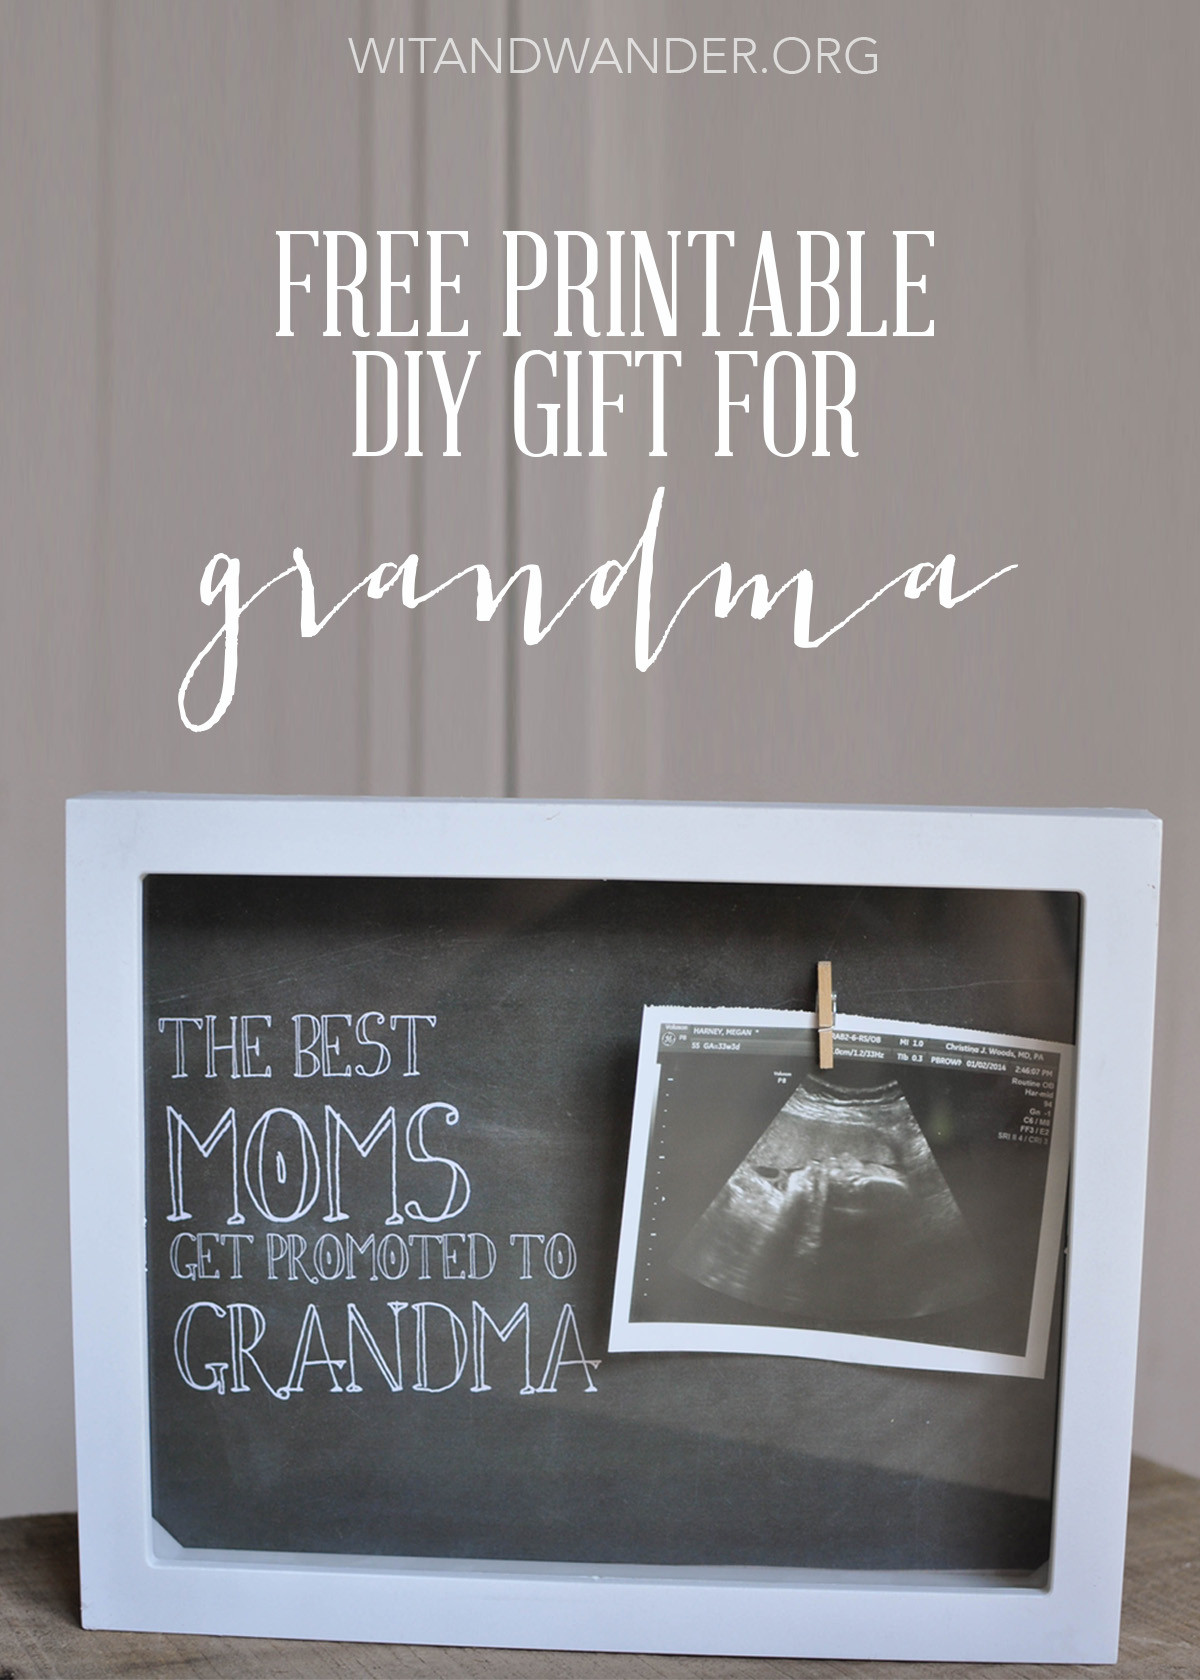 DIY Gift Ideas For Grandma
 Homemade Shadow Box Gift for Grandma Wit & Wander